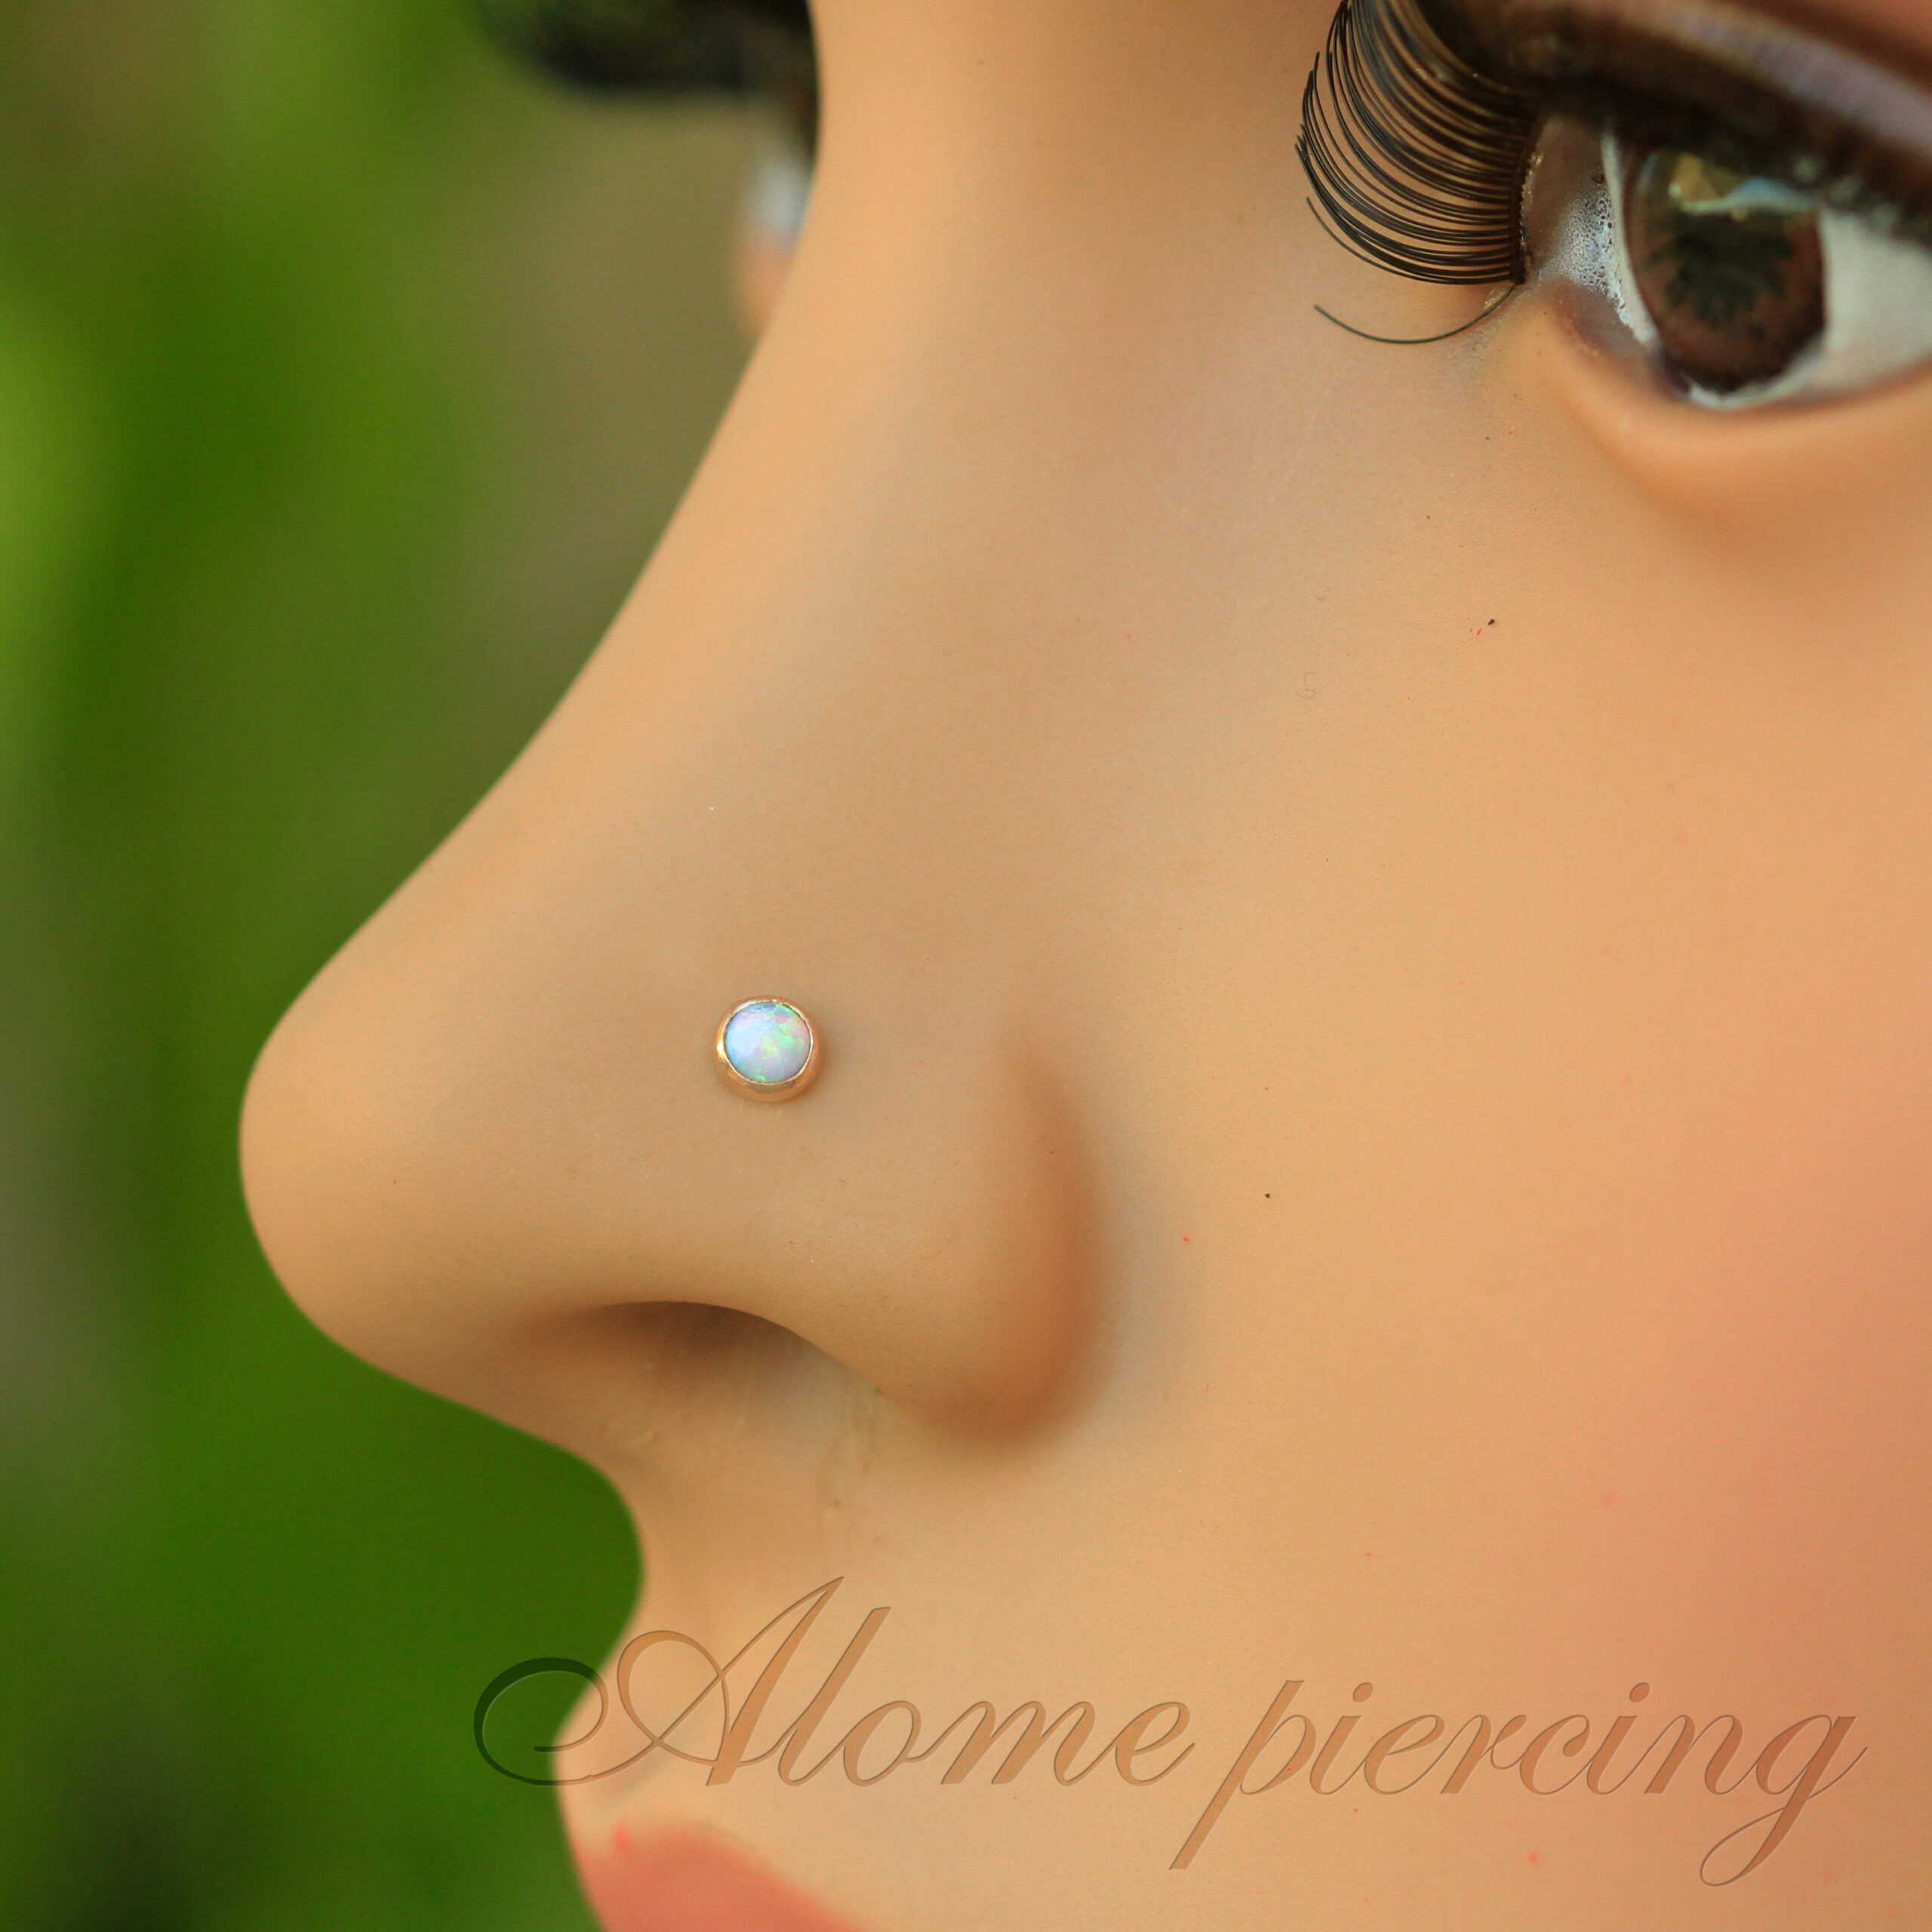 Nose Stud - Nose Ring - Nose Ring stud - Sterling Silver 3mm White/Blue Opal  | eBay